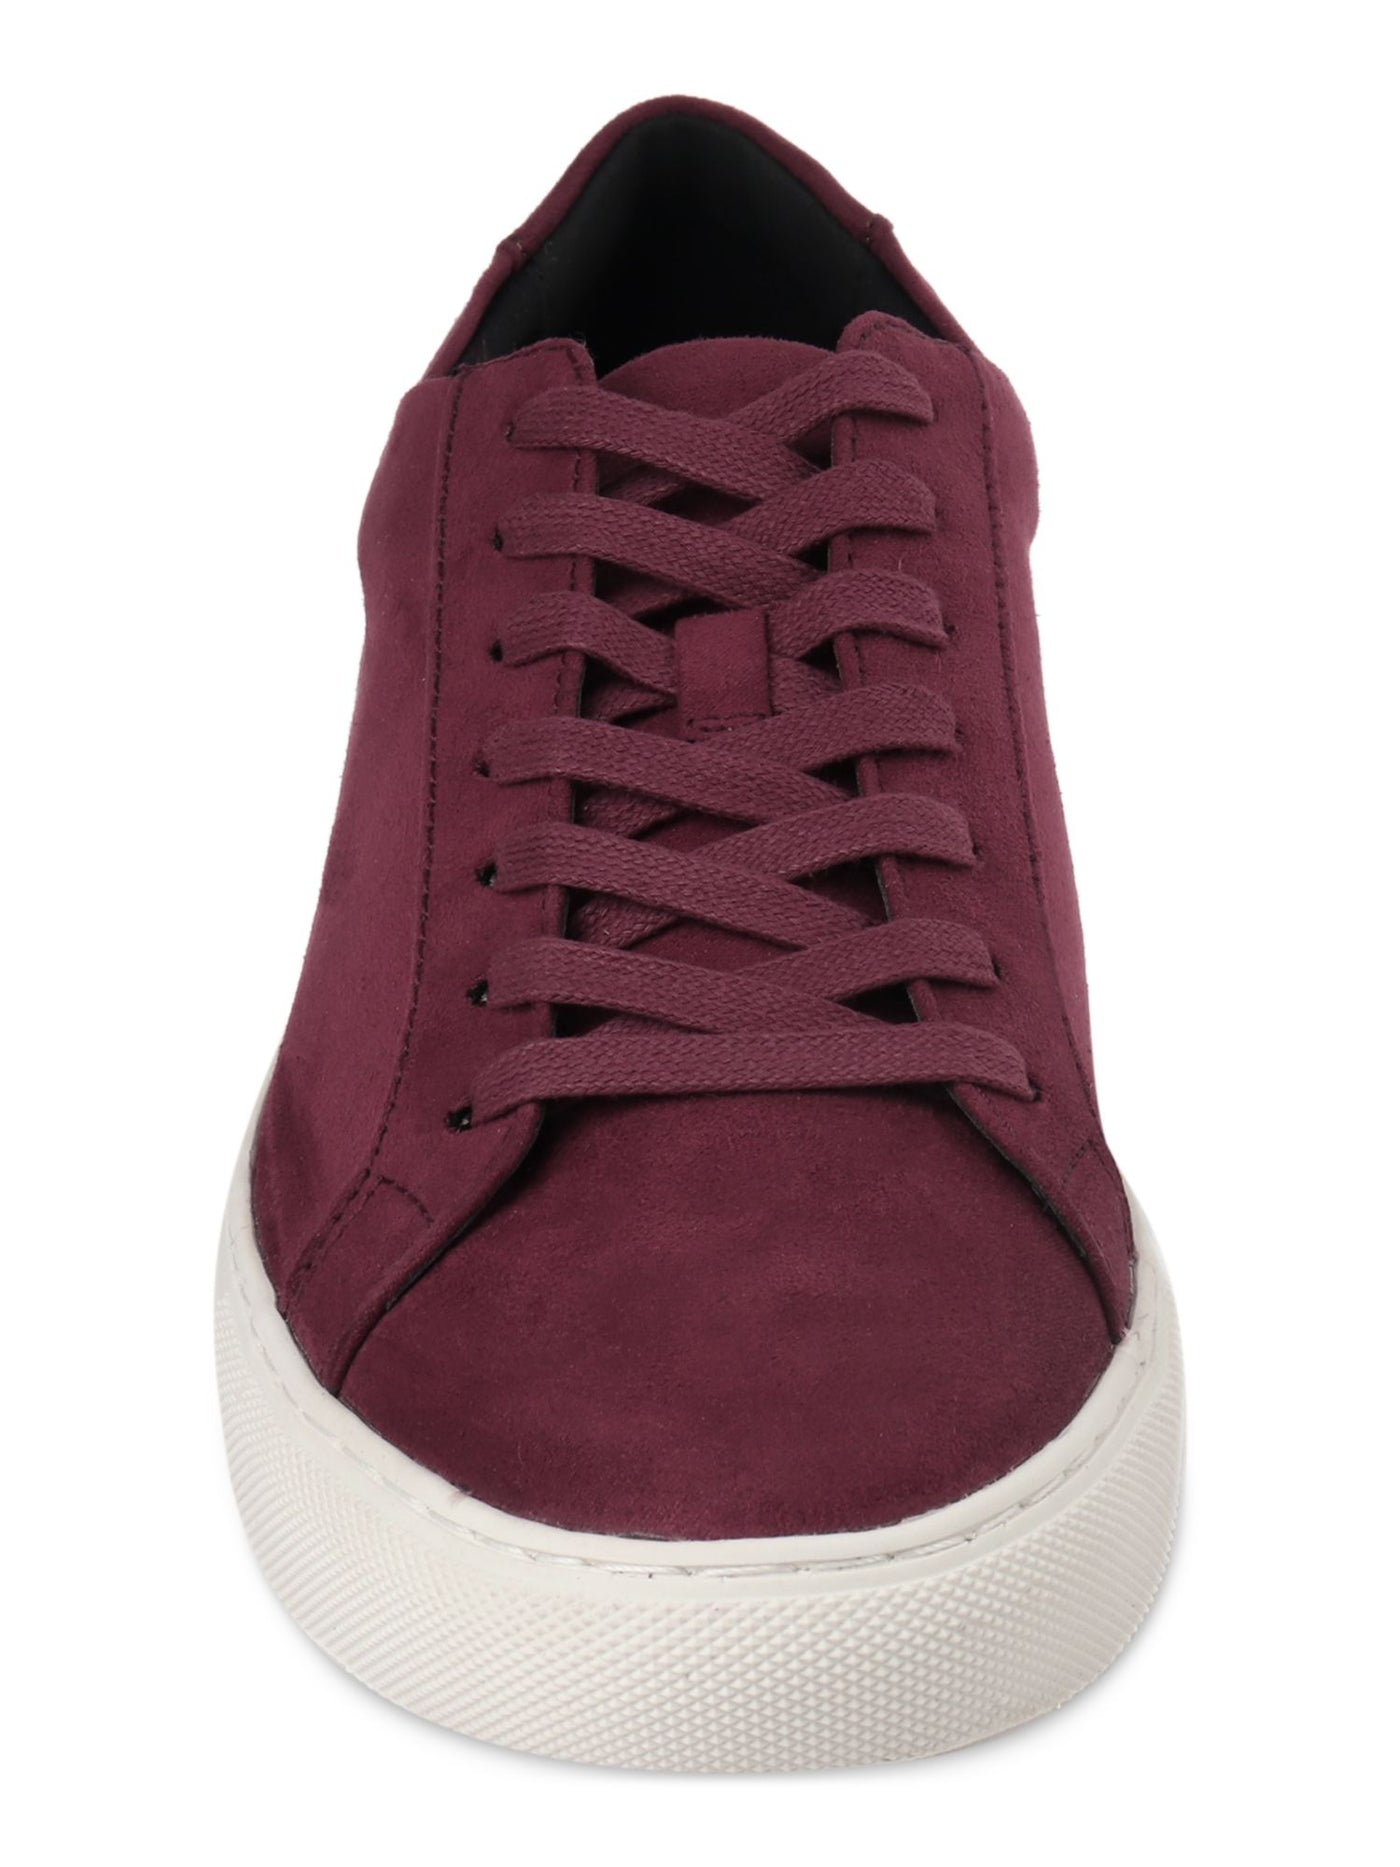 ALFANI Mens Burgundy Comfort Grayson Round Toe Platform Lace-Up Athletic Sneakers Shoes 10.5 M